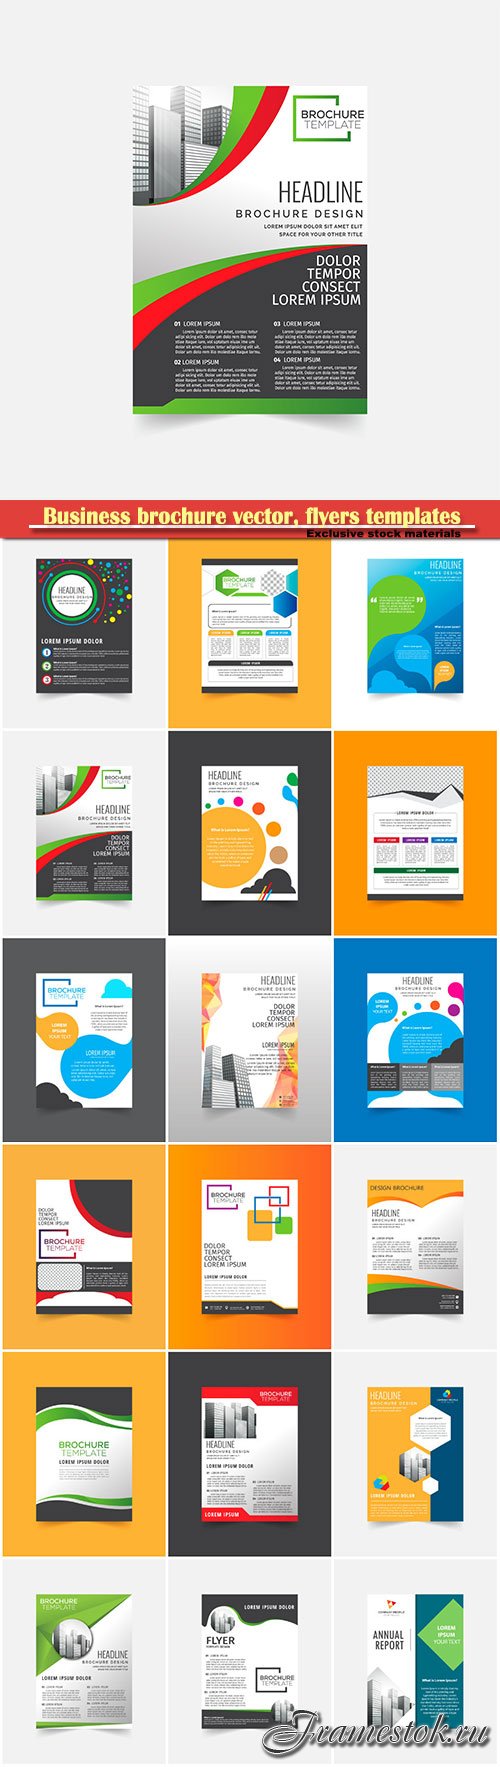 Business brochure vector, flyers templates, report cover design # 90